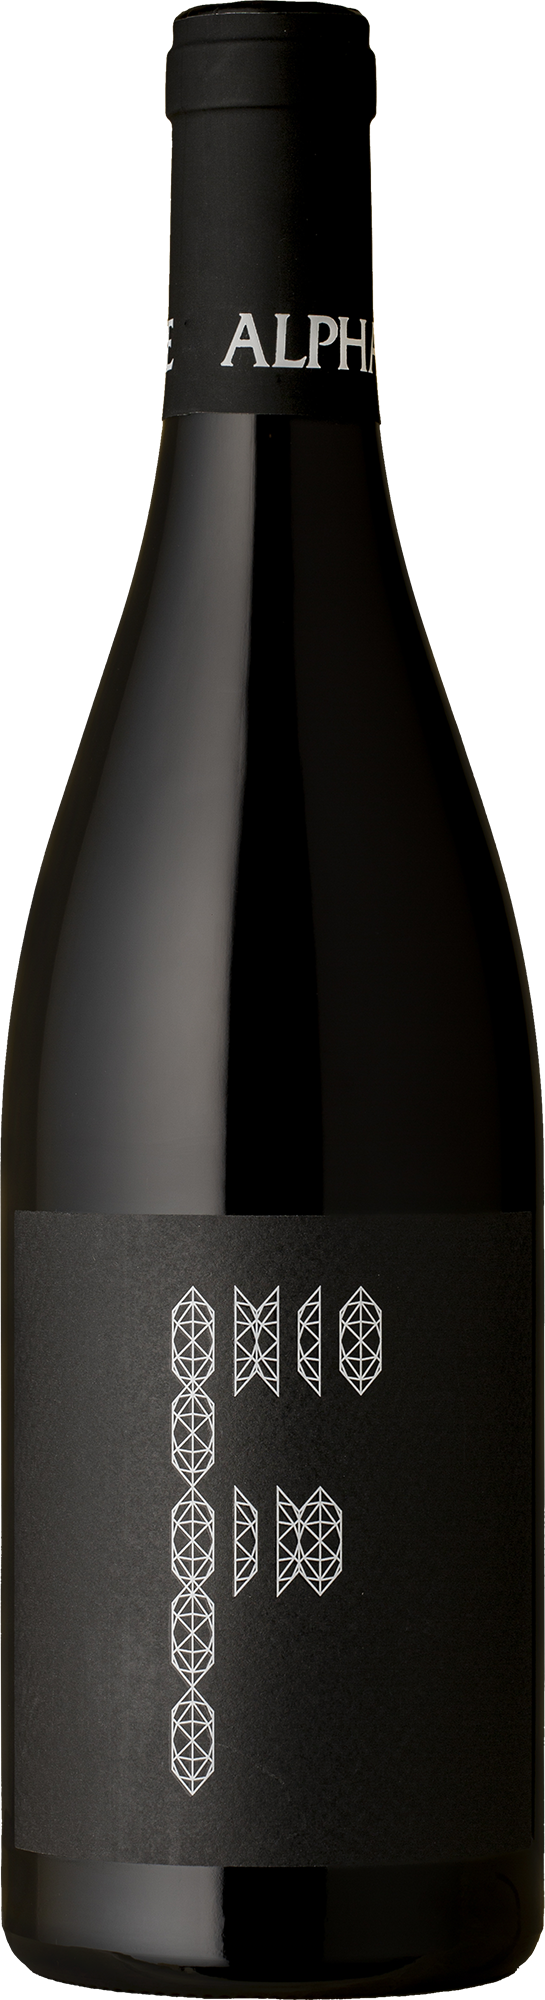 Alpha Box & Dice - Fog Nebbiolo 2021 Red Wine